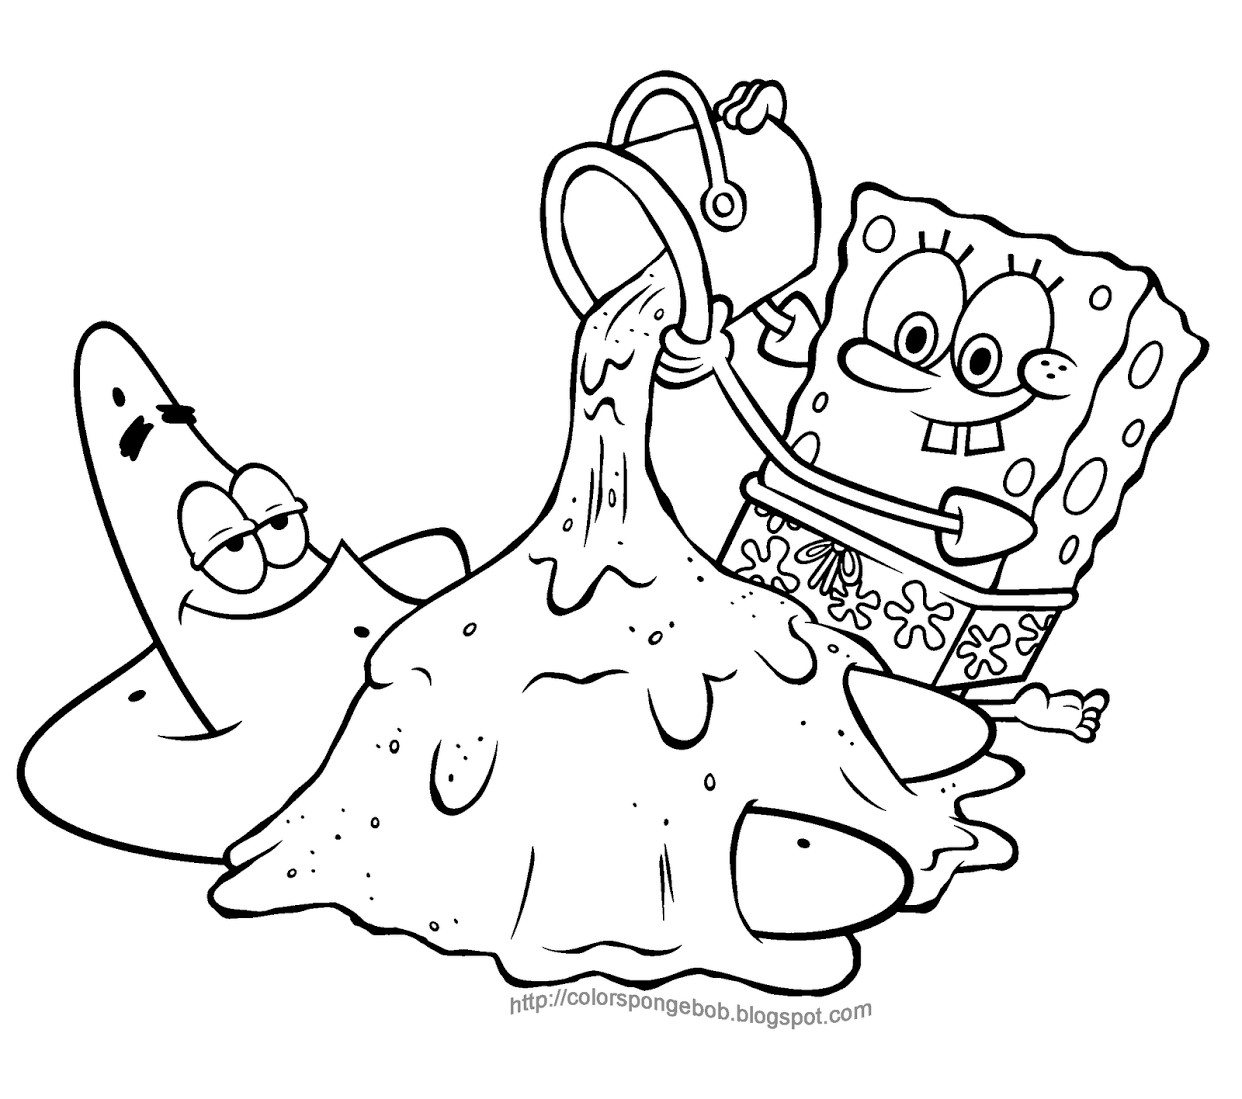 spongebob printable coloring pages printable spongebob printable coloring pages free spongebob printable coloring pages online spongebob printable